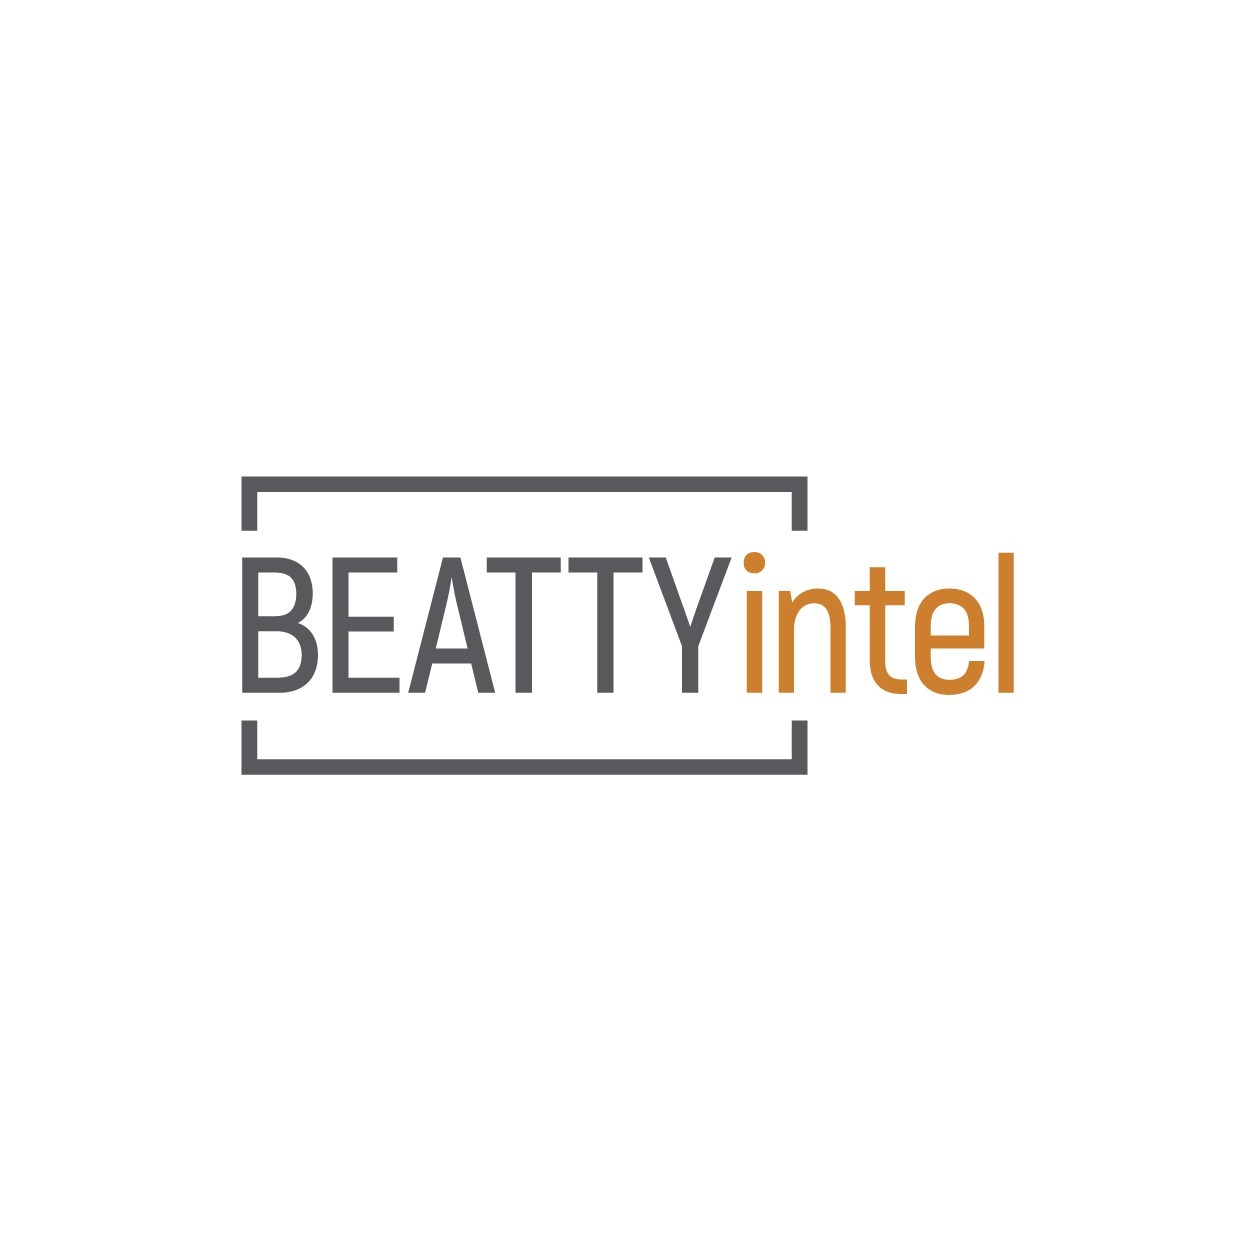 Beattyintel Co., Ltd.